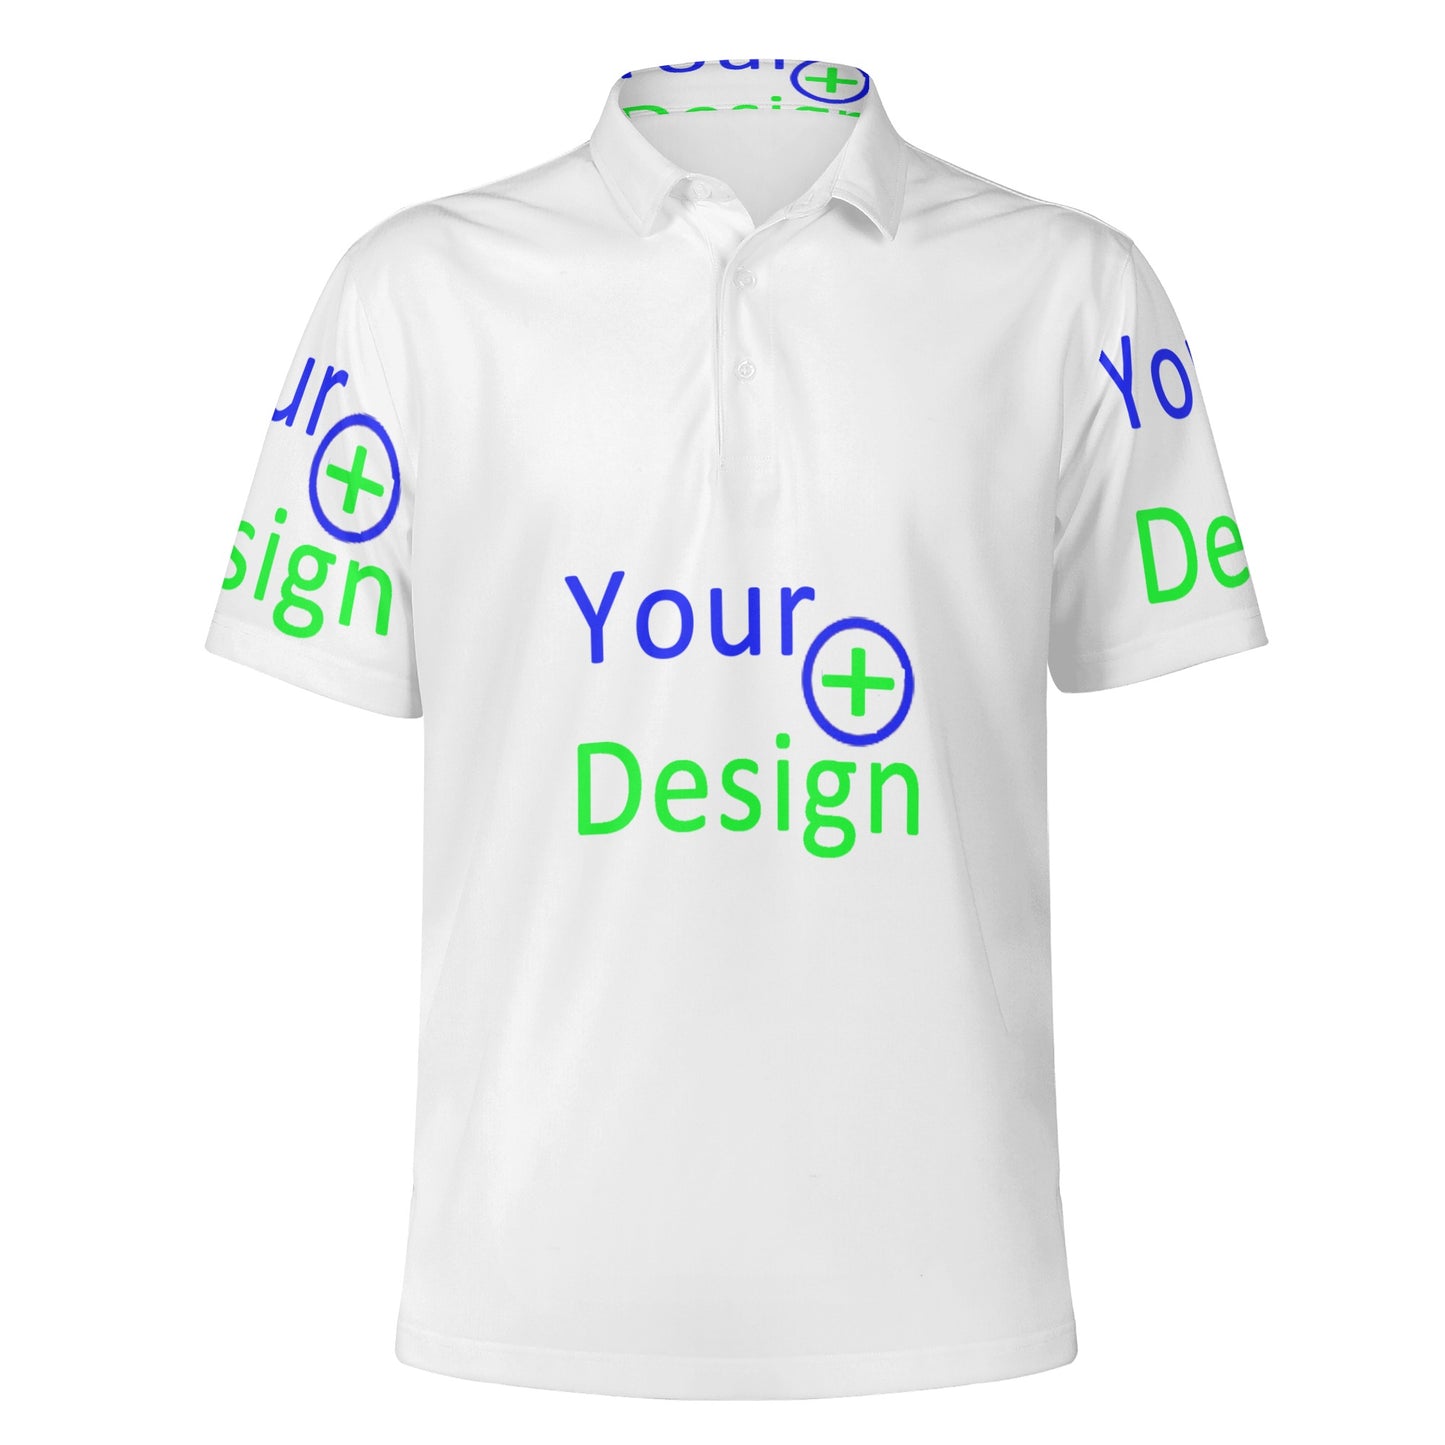 Mens All Over Print Polo Shirt-Your design 